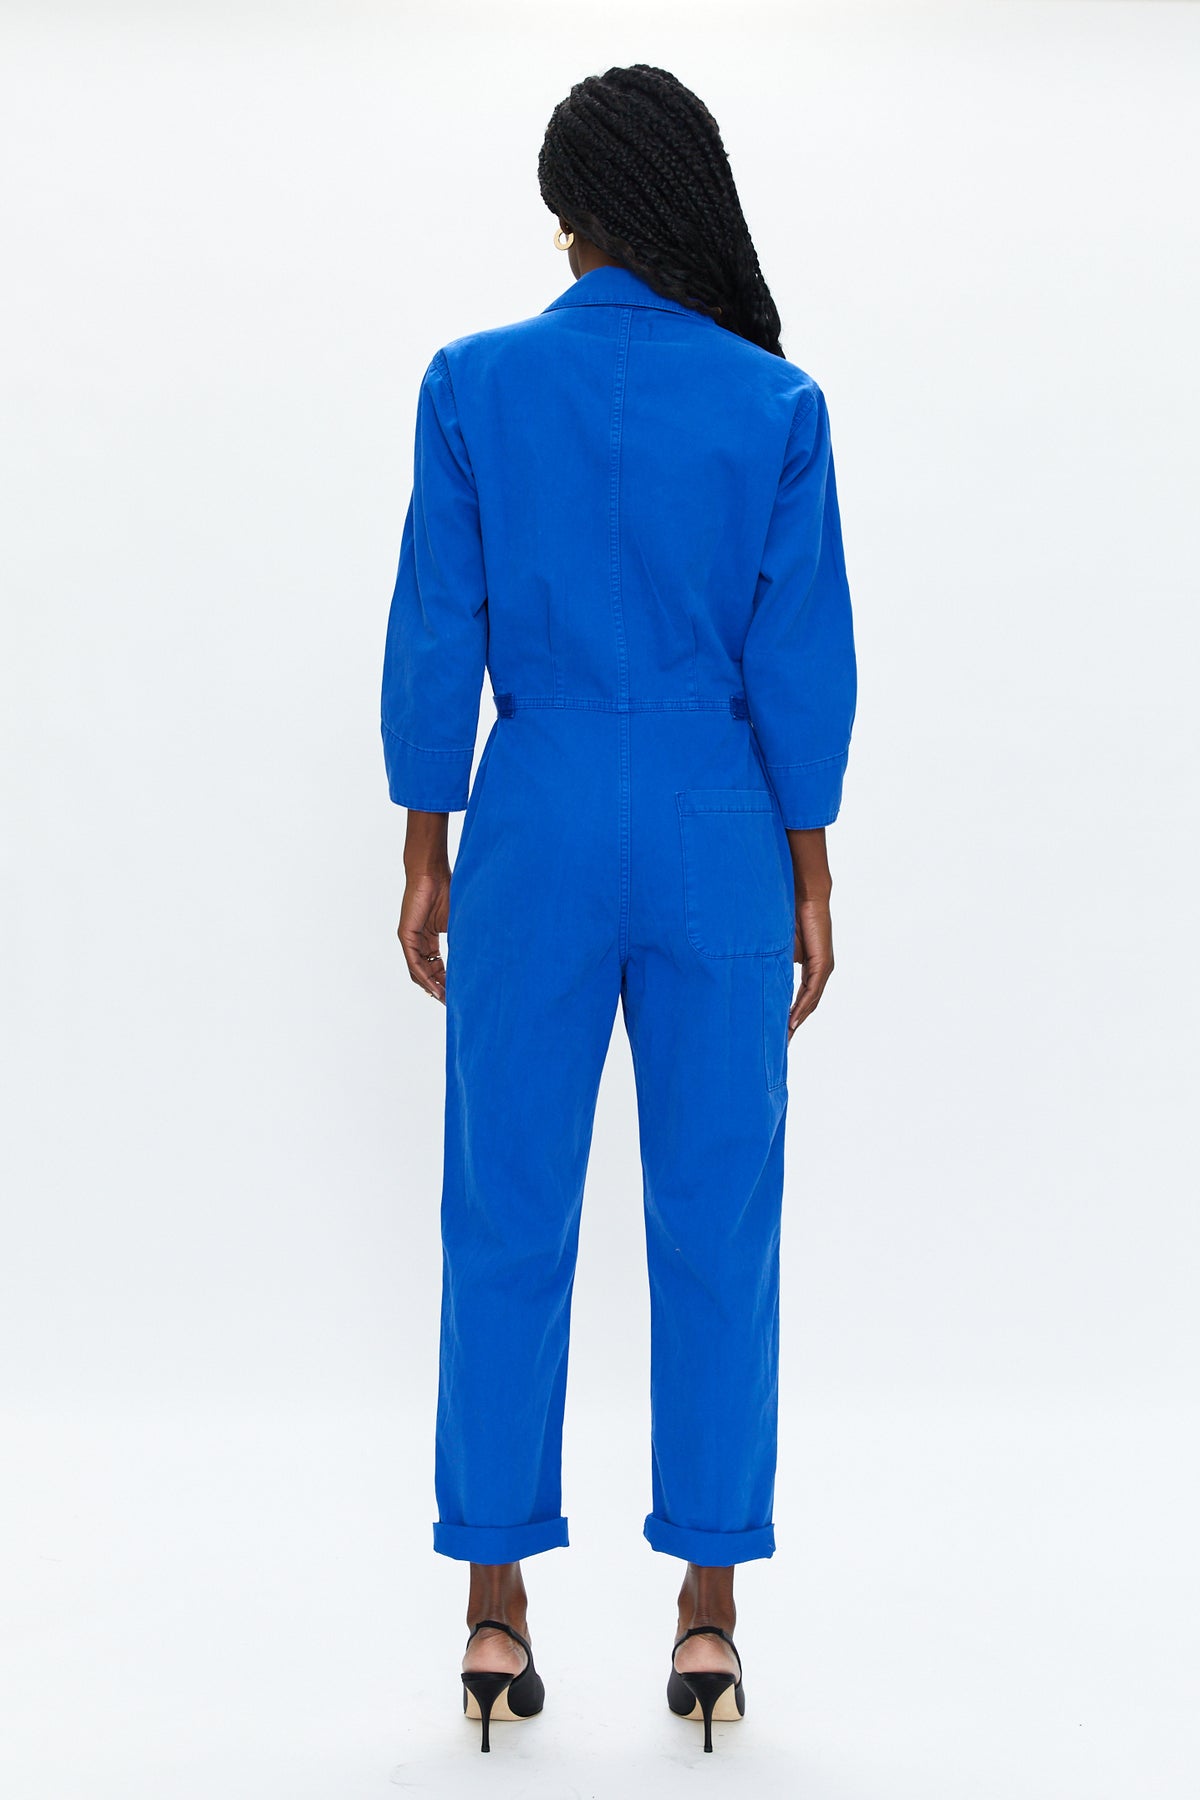 Tanner Long Sleeve Field Suit - Cobalt
            
              Sale